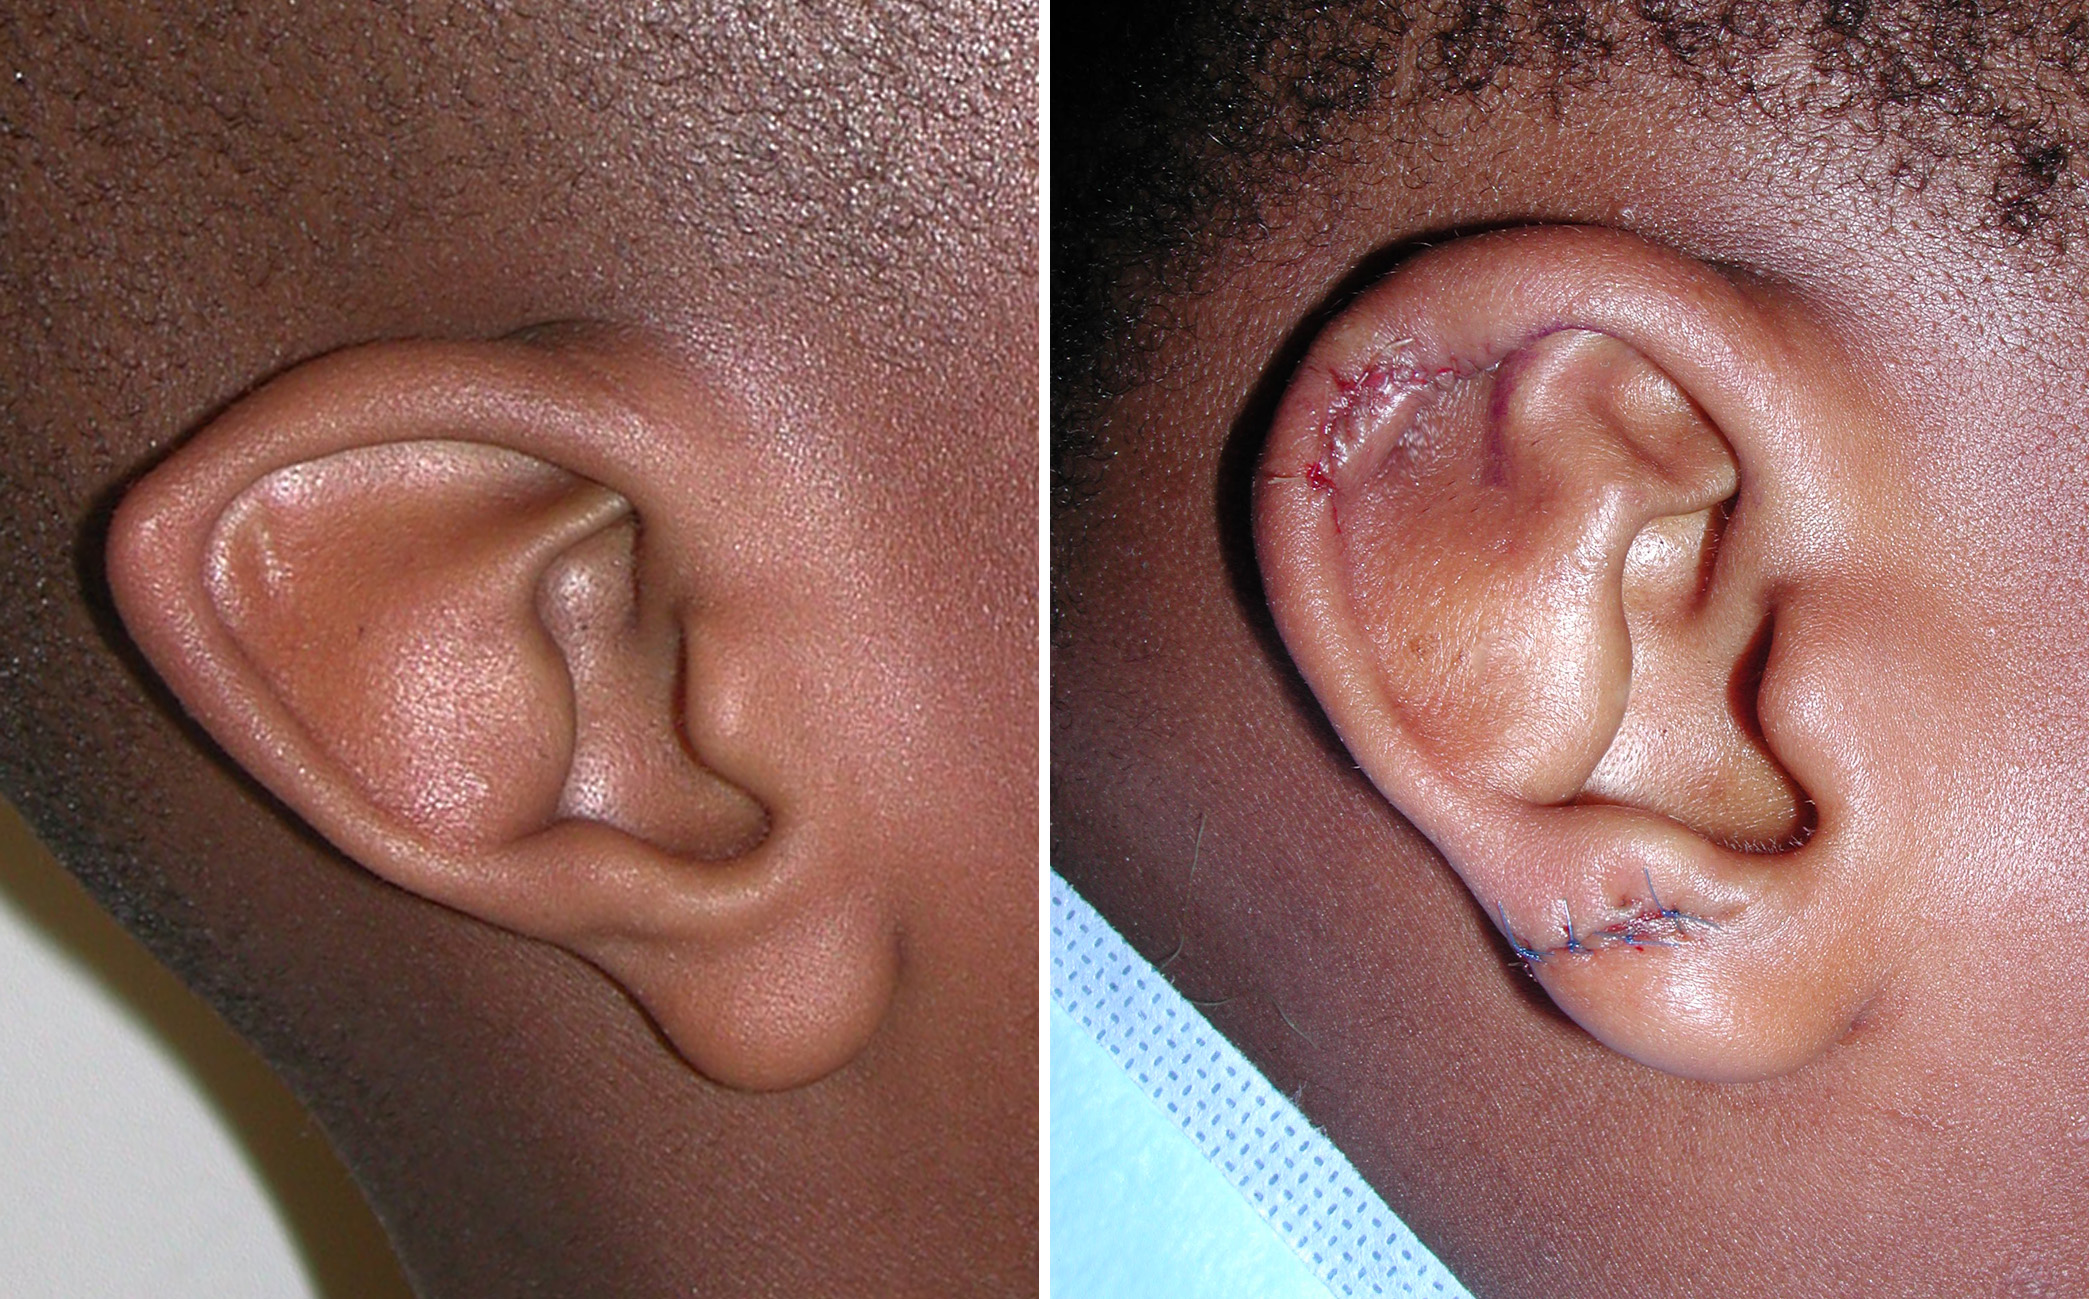 pointy ear surgery